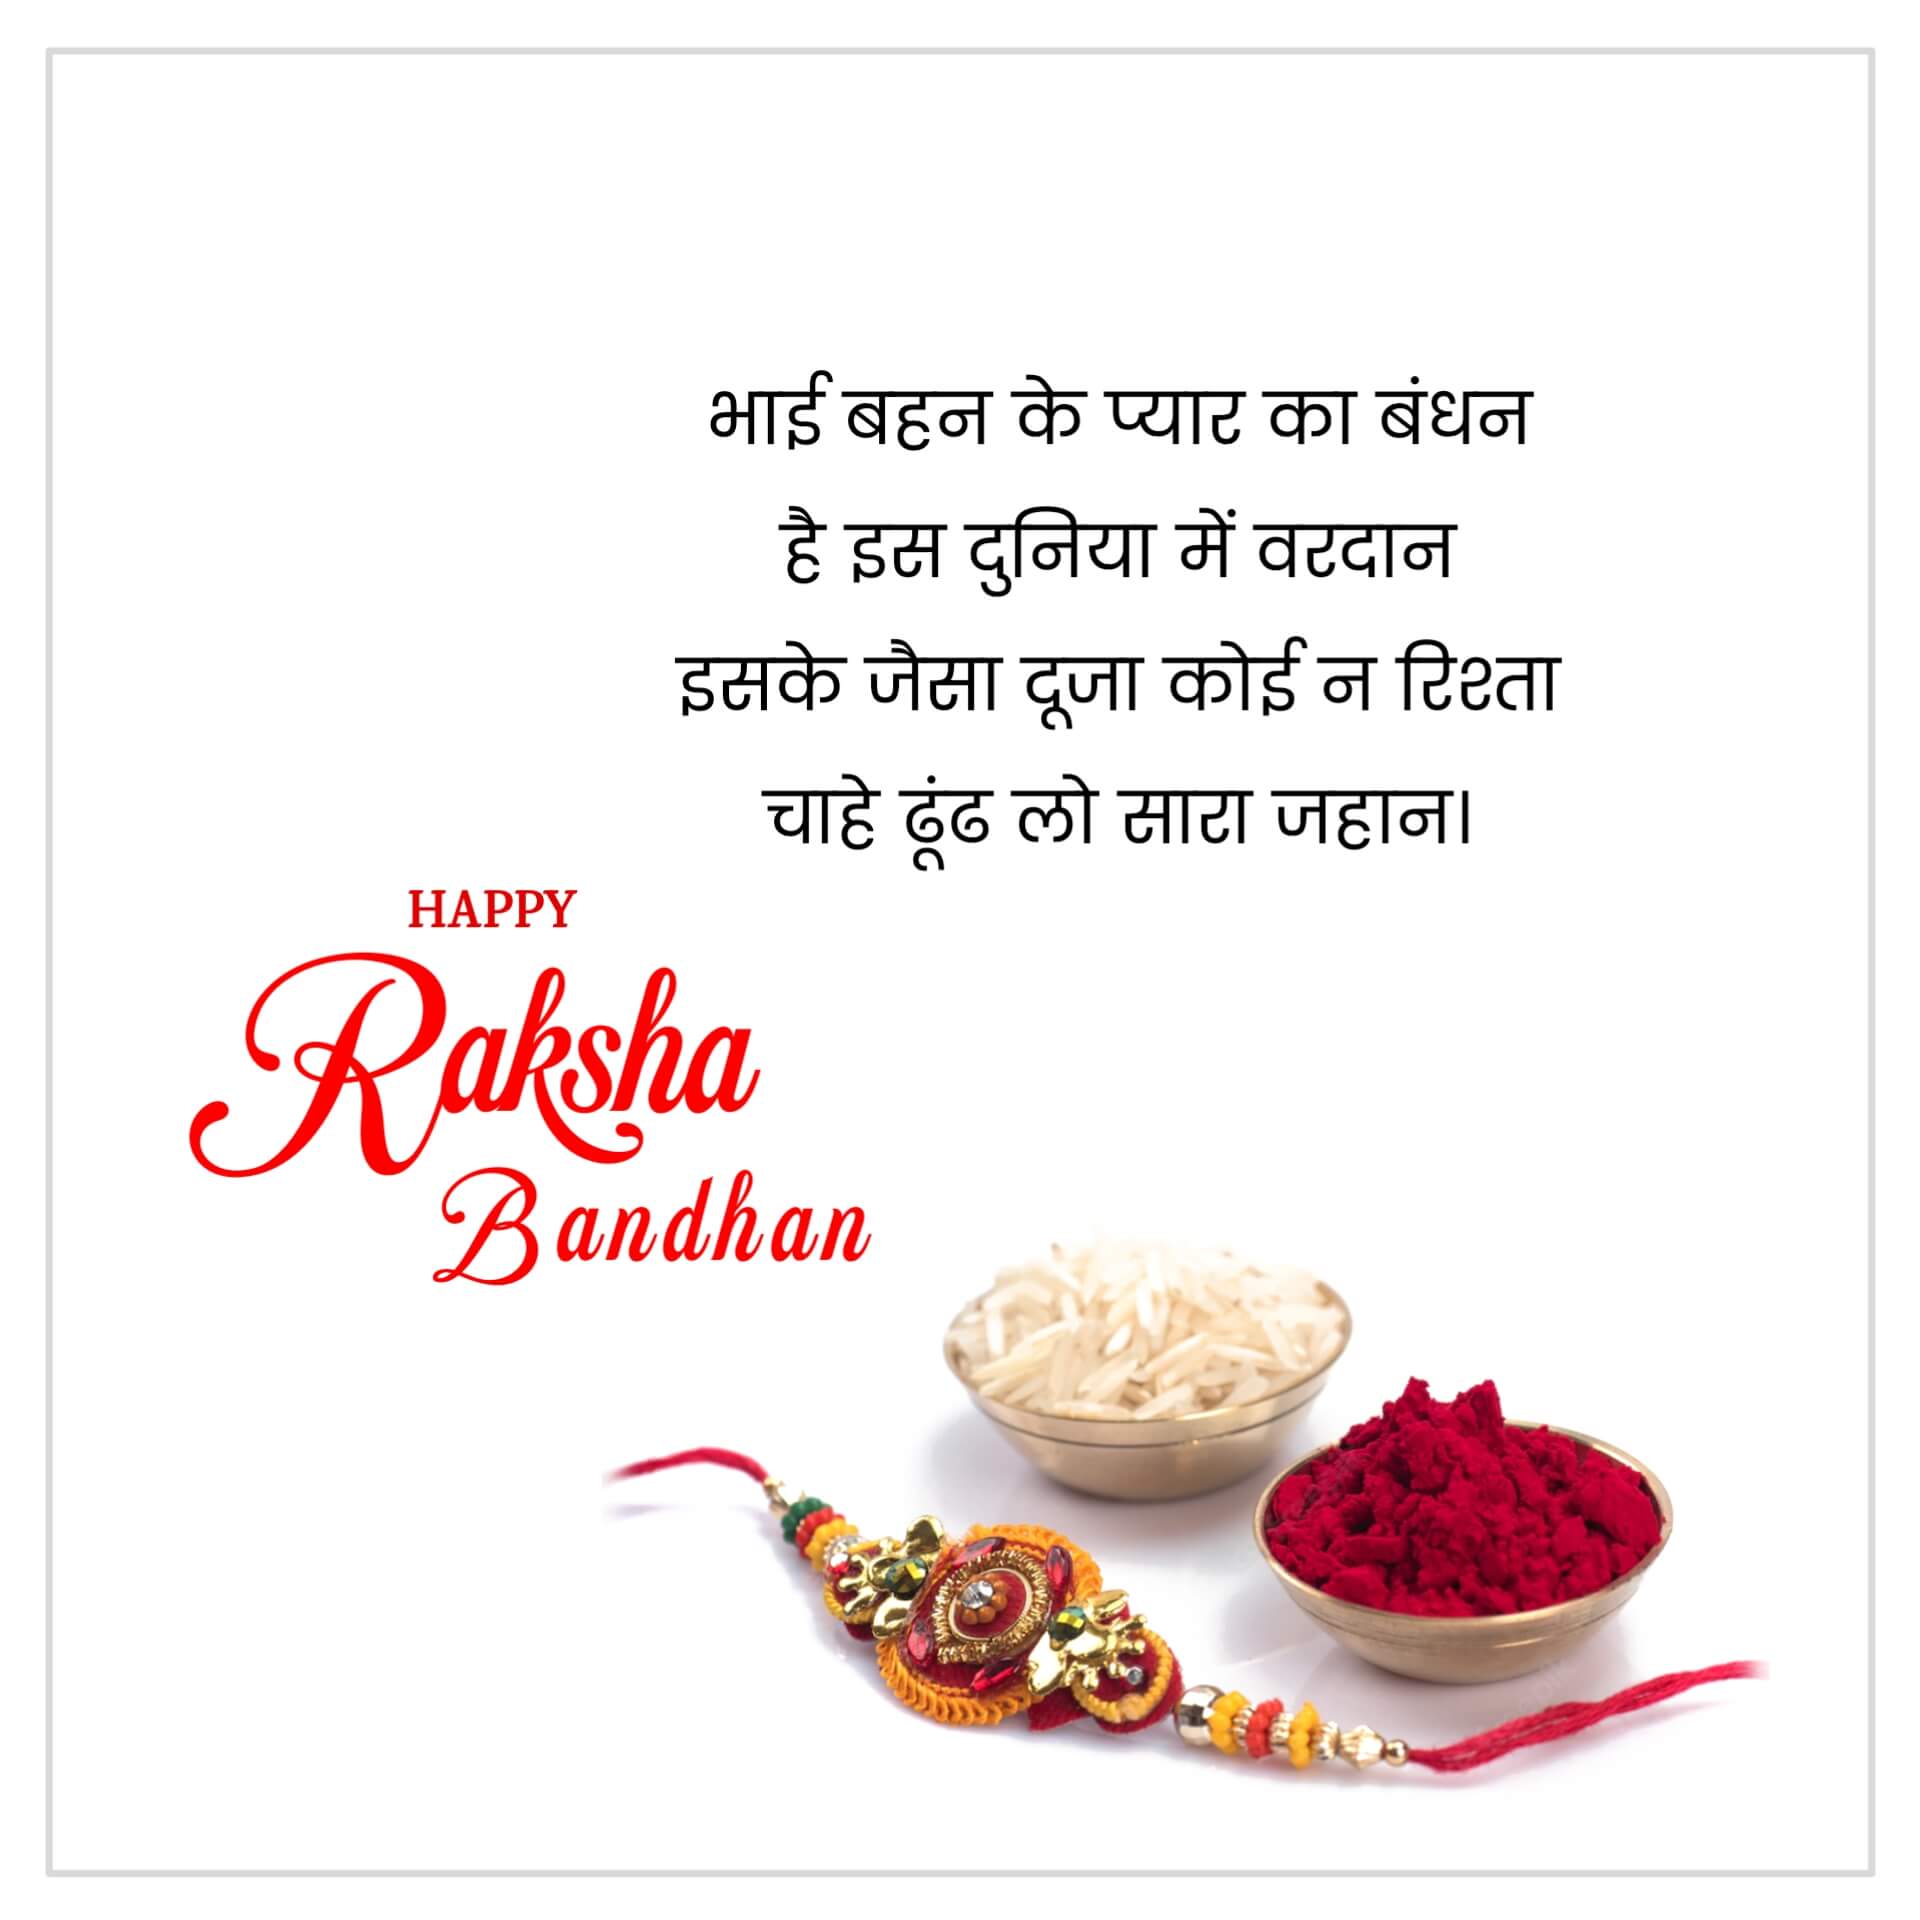 Raksha Bandhan Shayari Image in Hindi